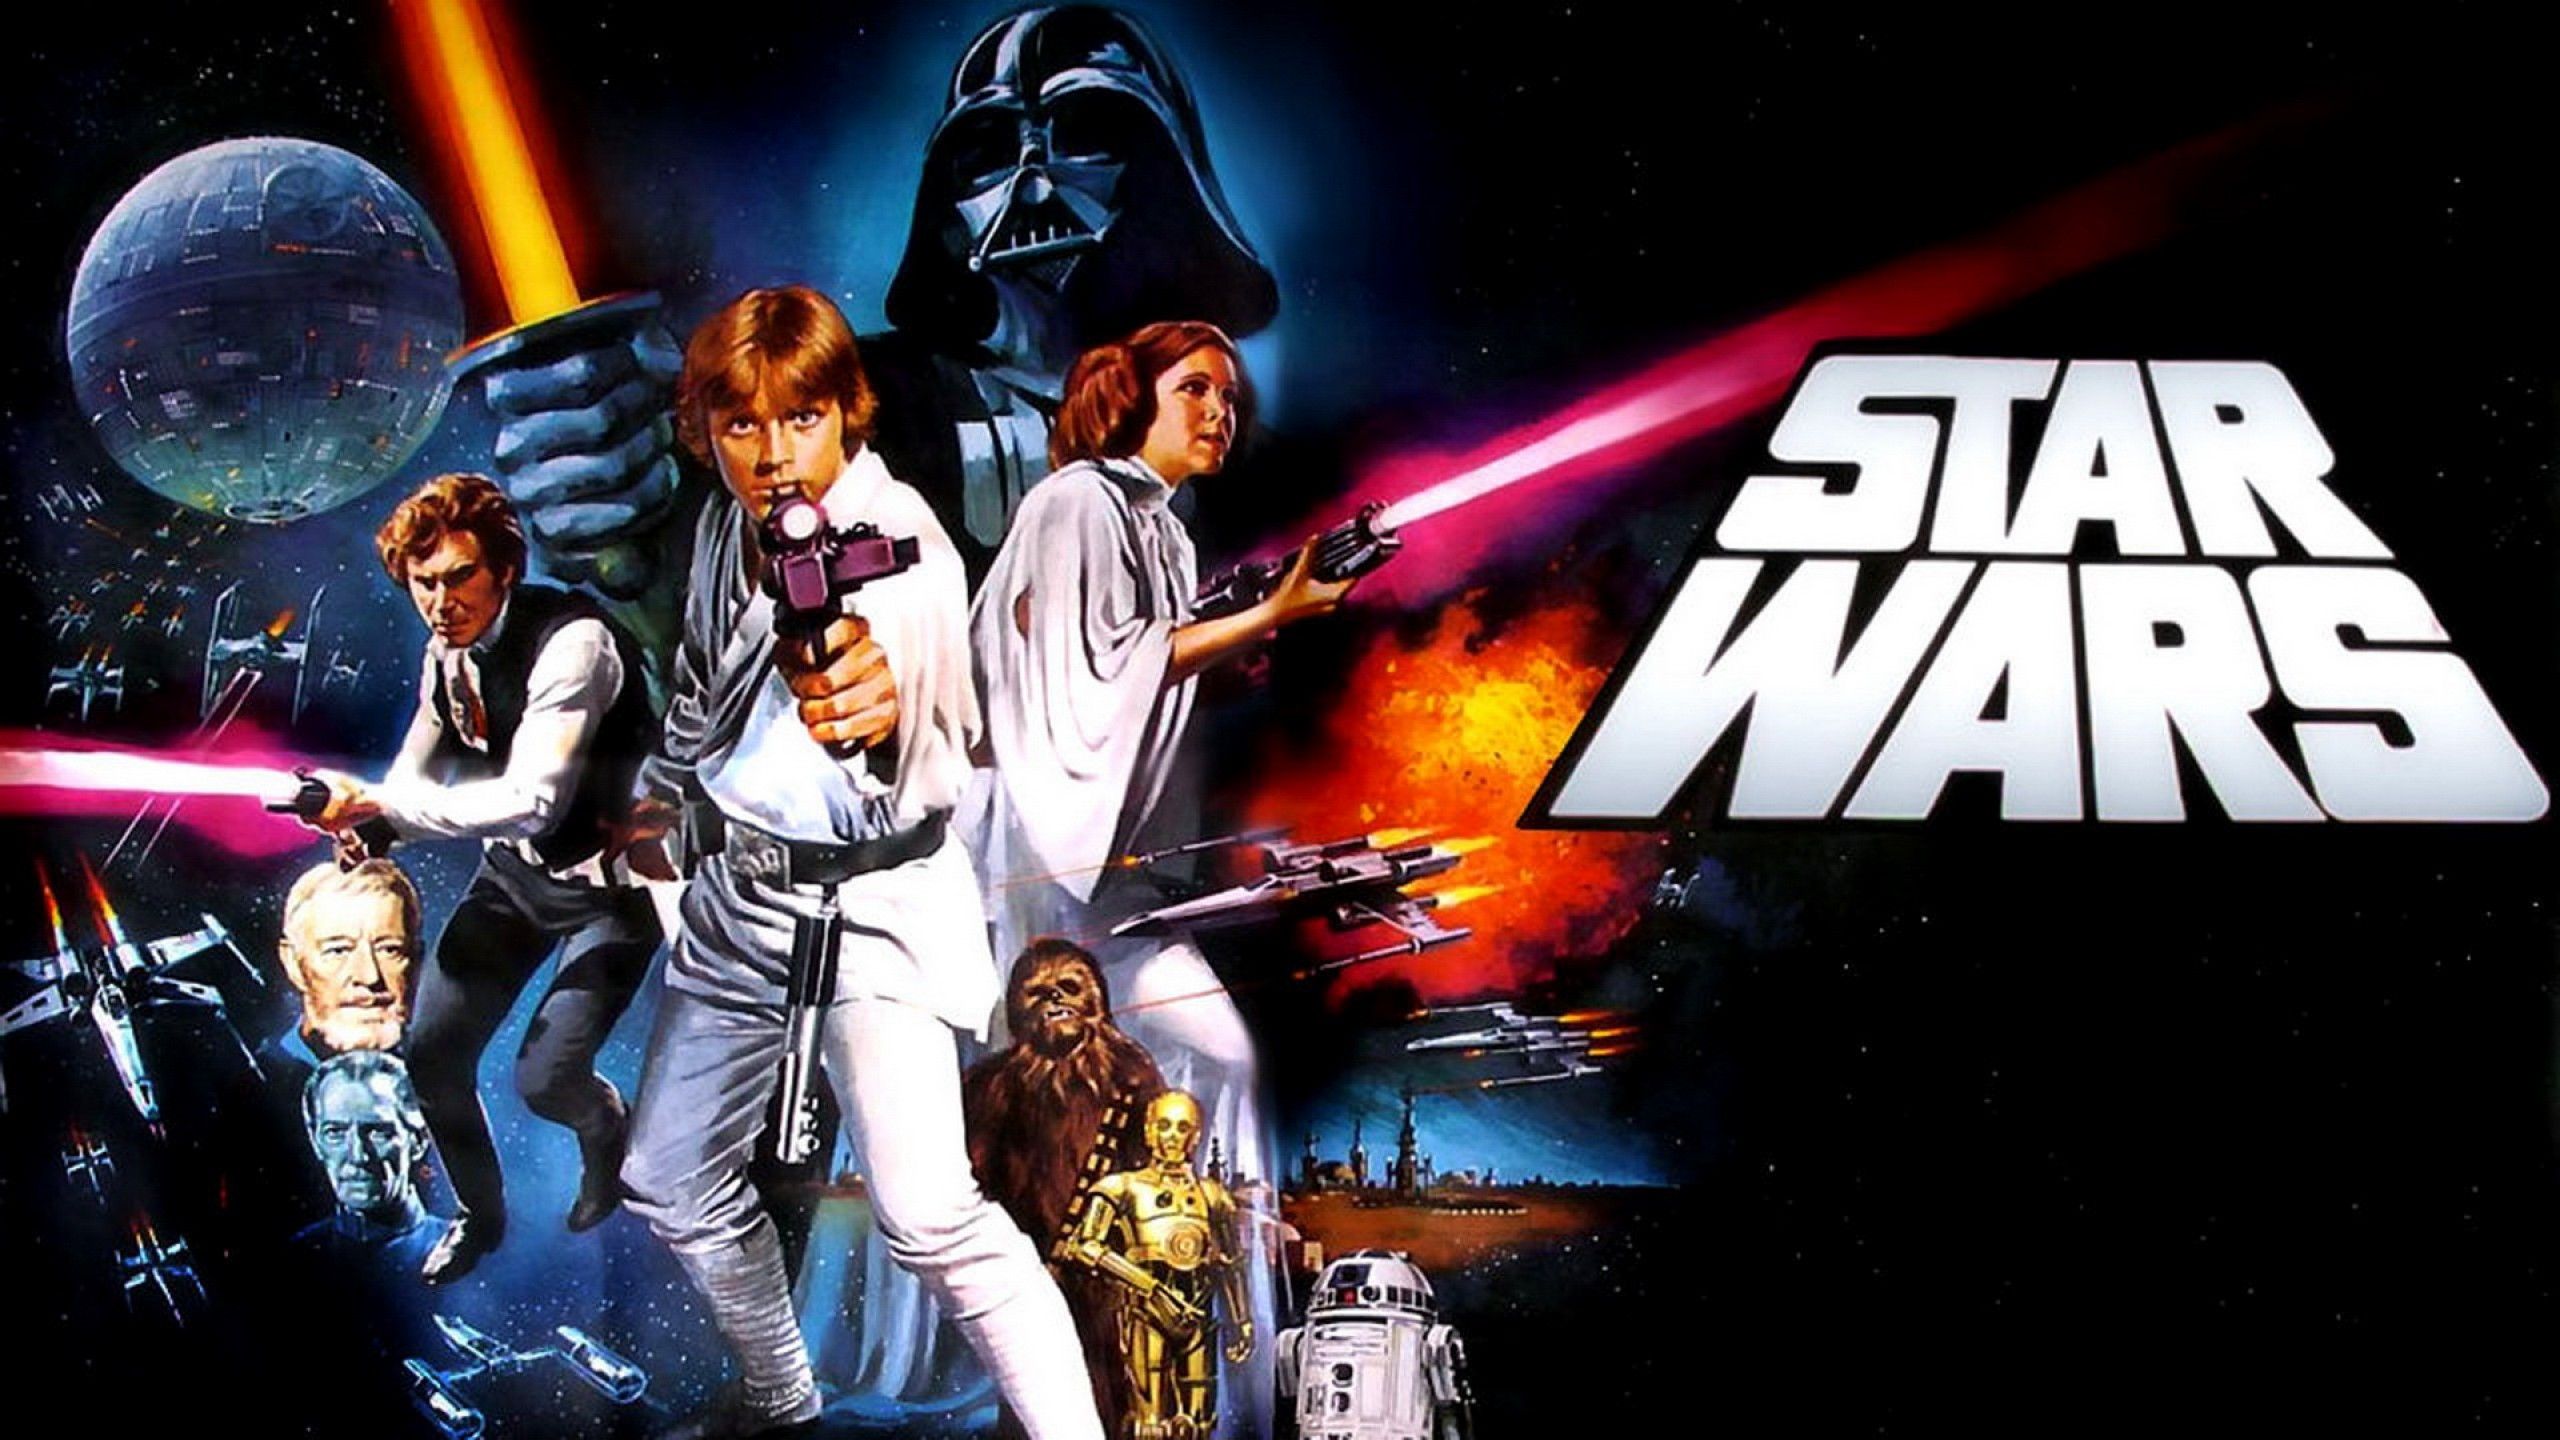 Star Wars Episode Iv Caracters Harrison Ford Darth Vader Carrie Fisher Luke Skywalker Chewbacca Wallpaper HD 2560x1440, Wallpaper13.com